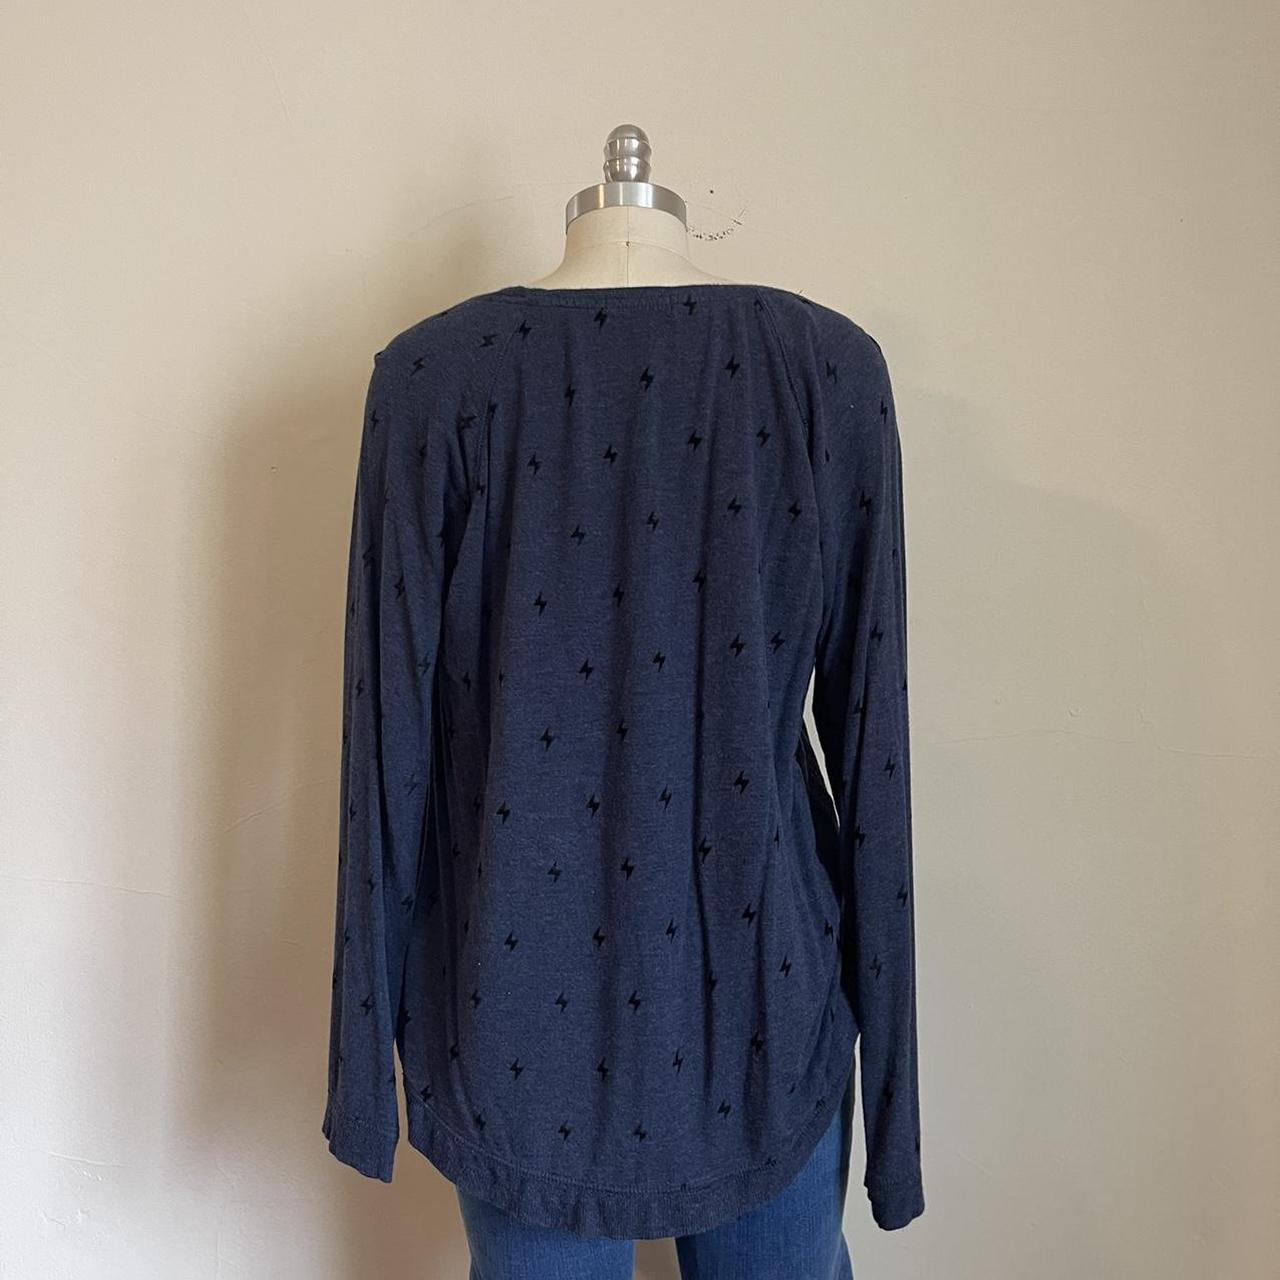 PJ Salvage Women's Blue and Navy Sweatshirt (3)